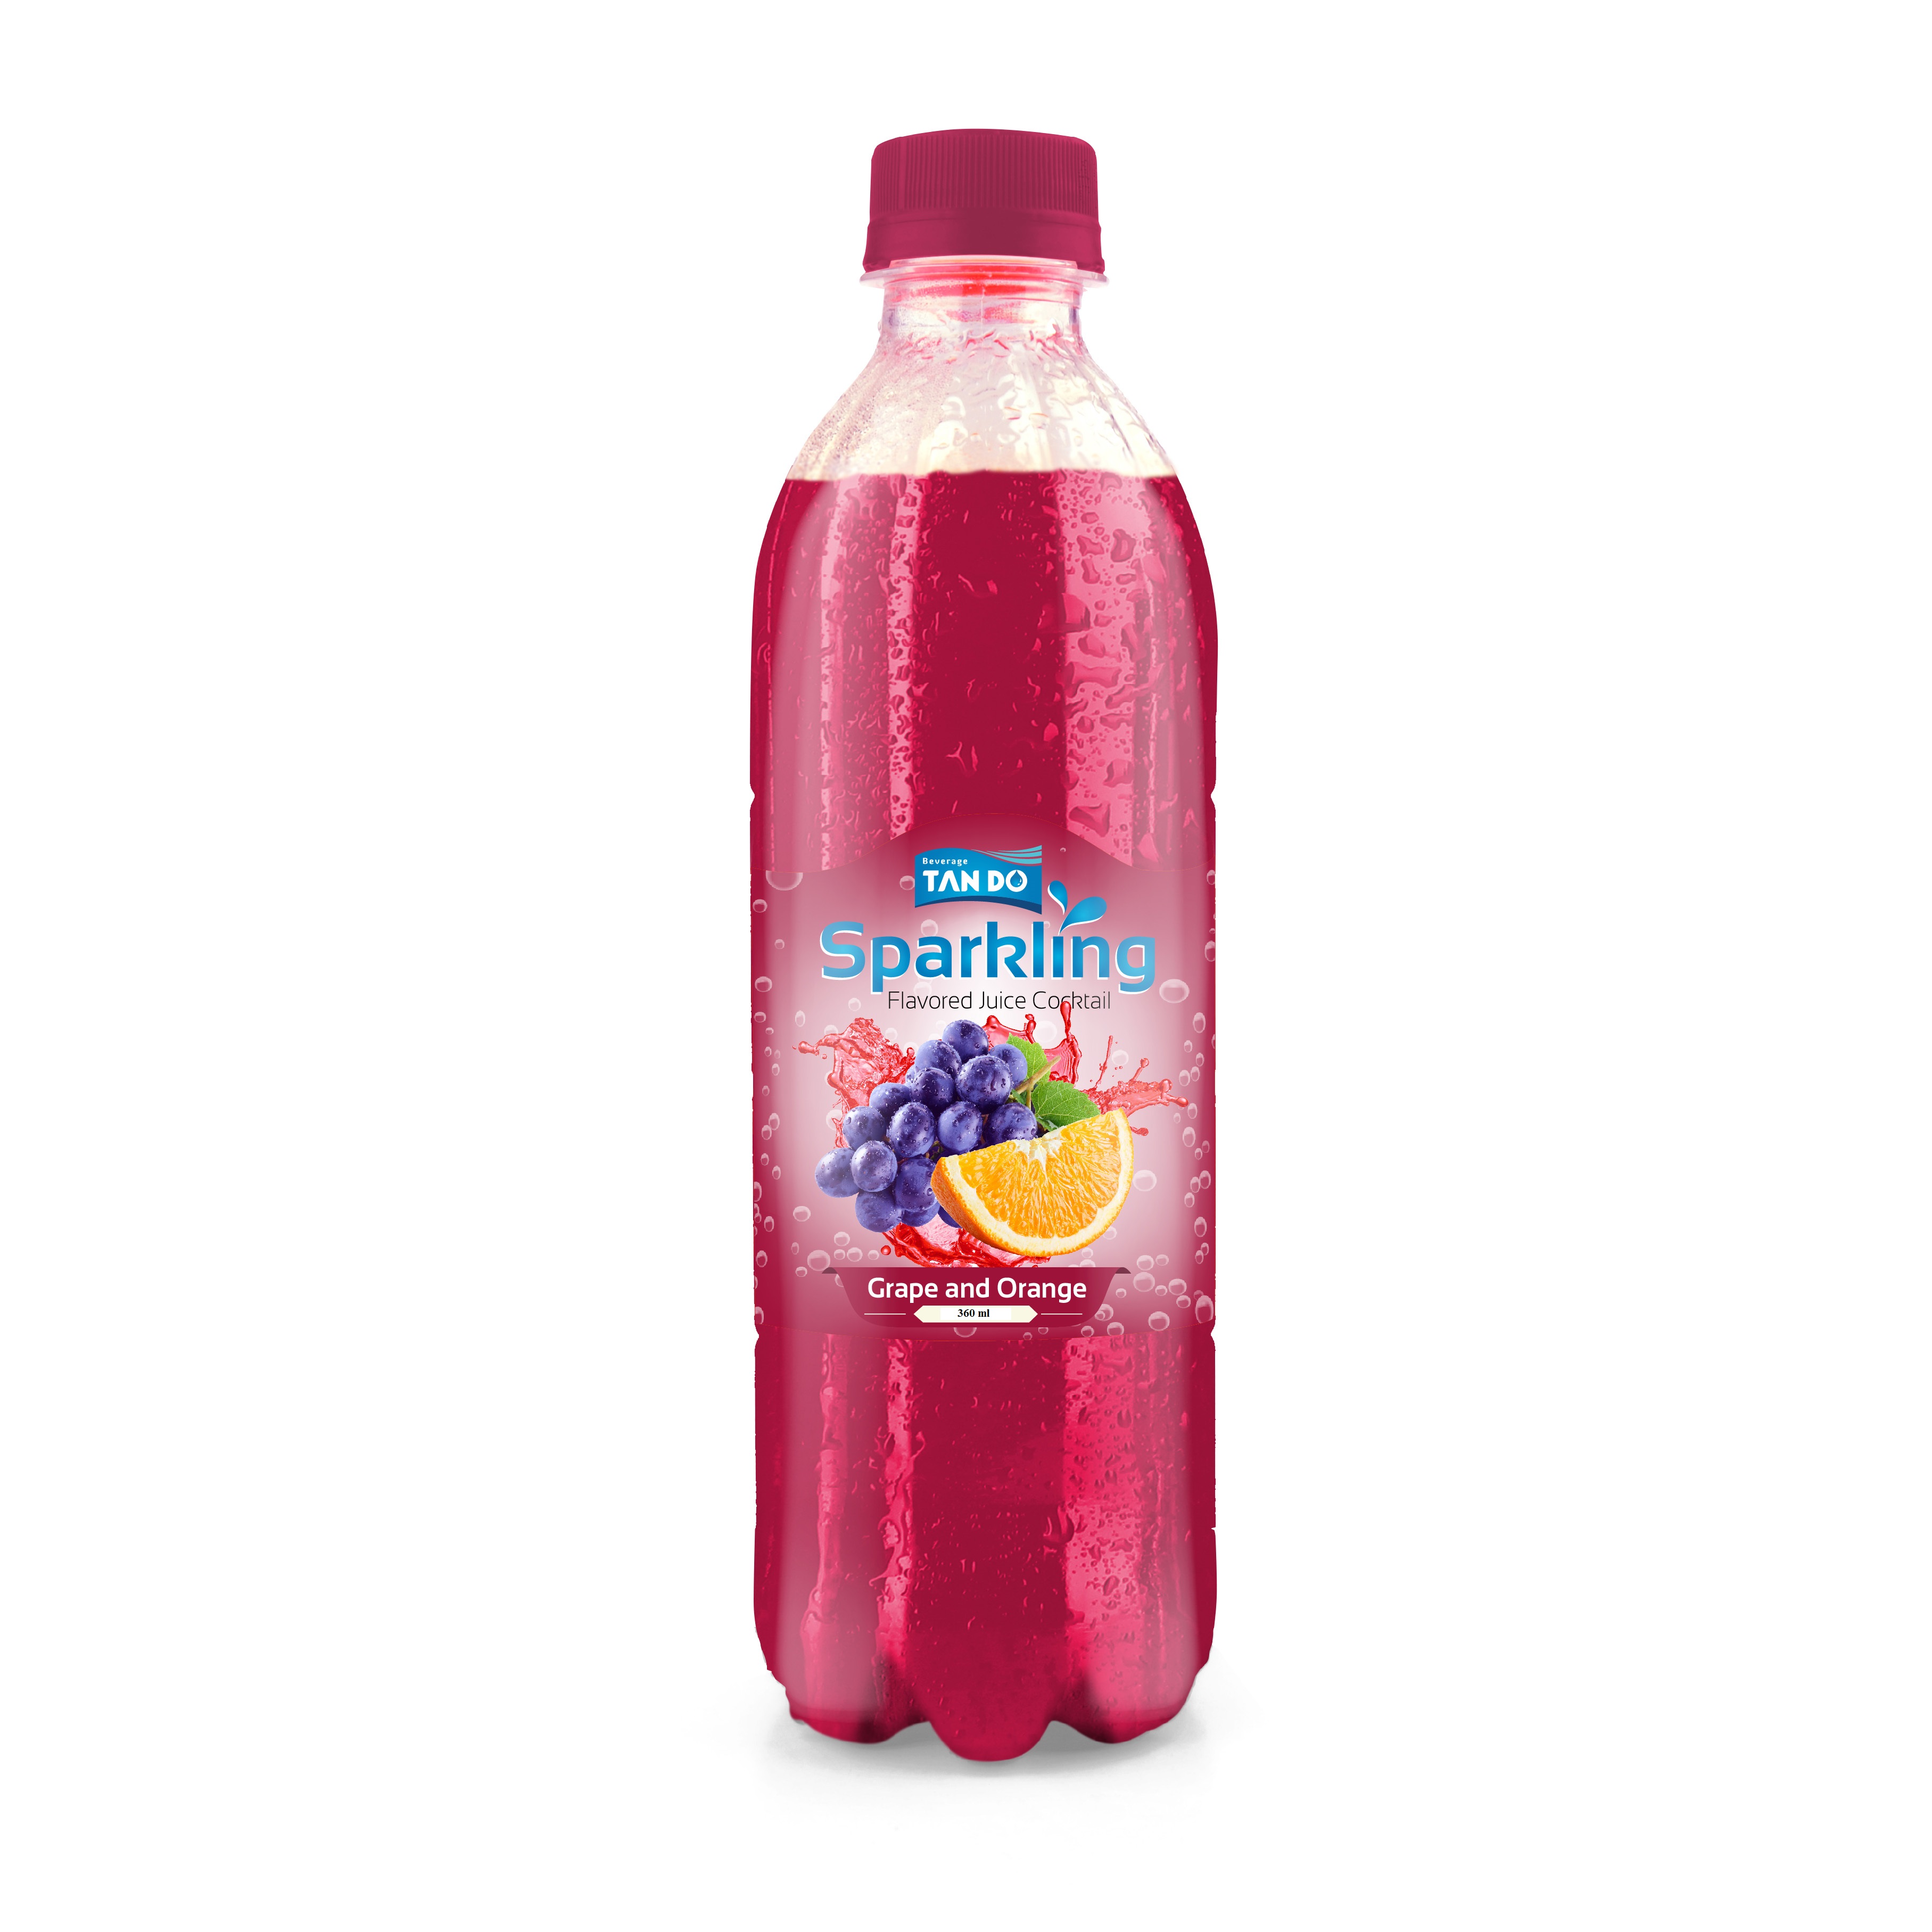 spackling juice, sport carbonated drink